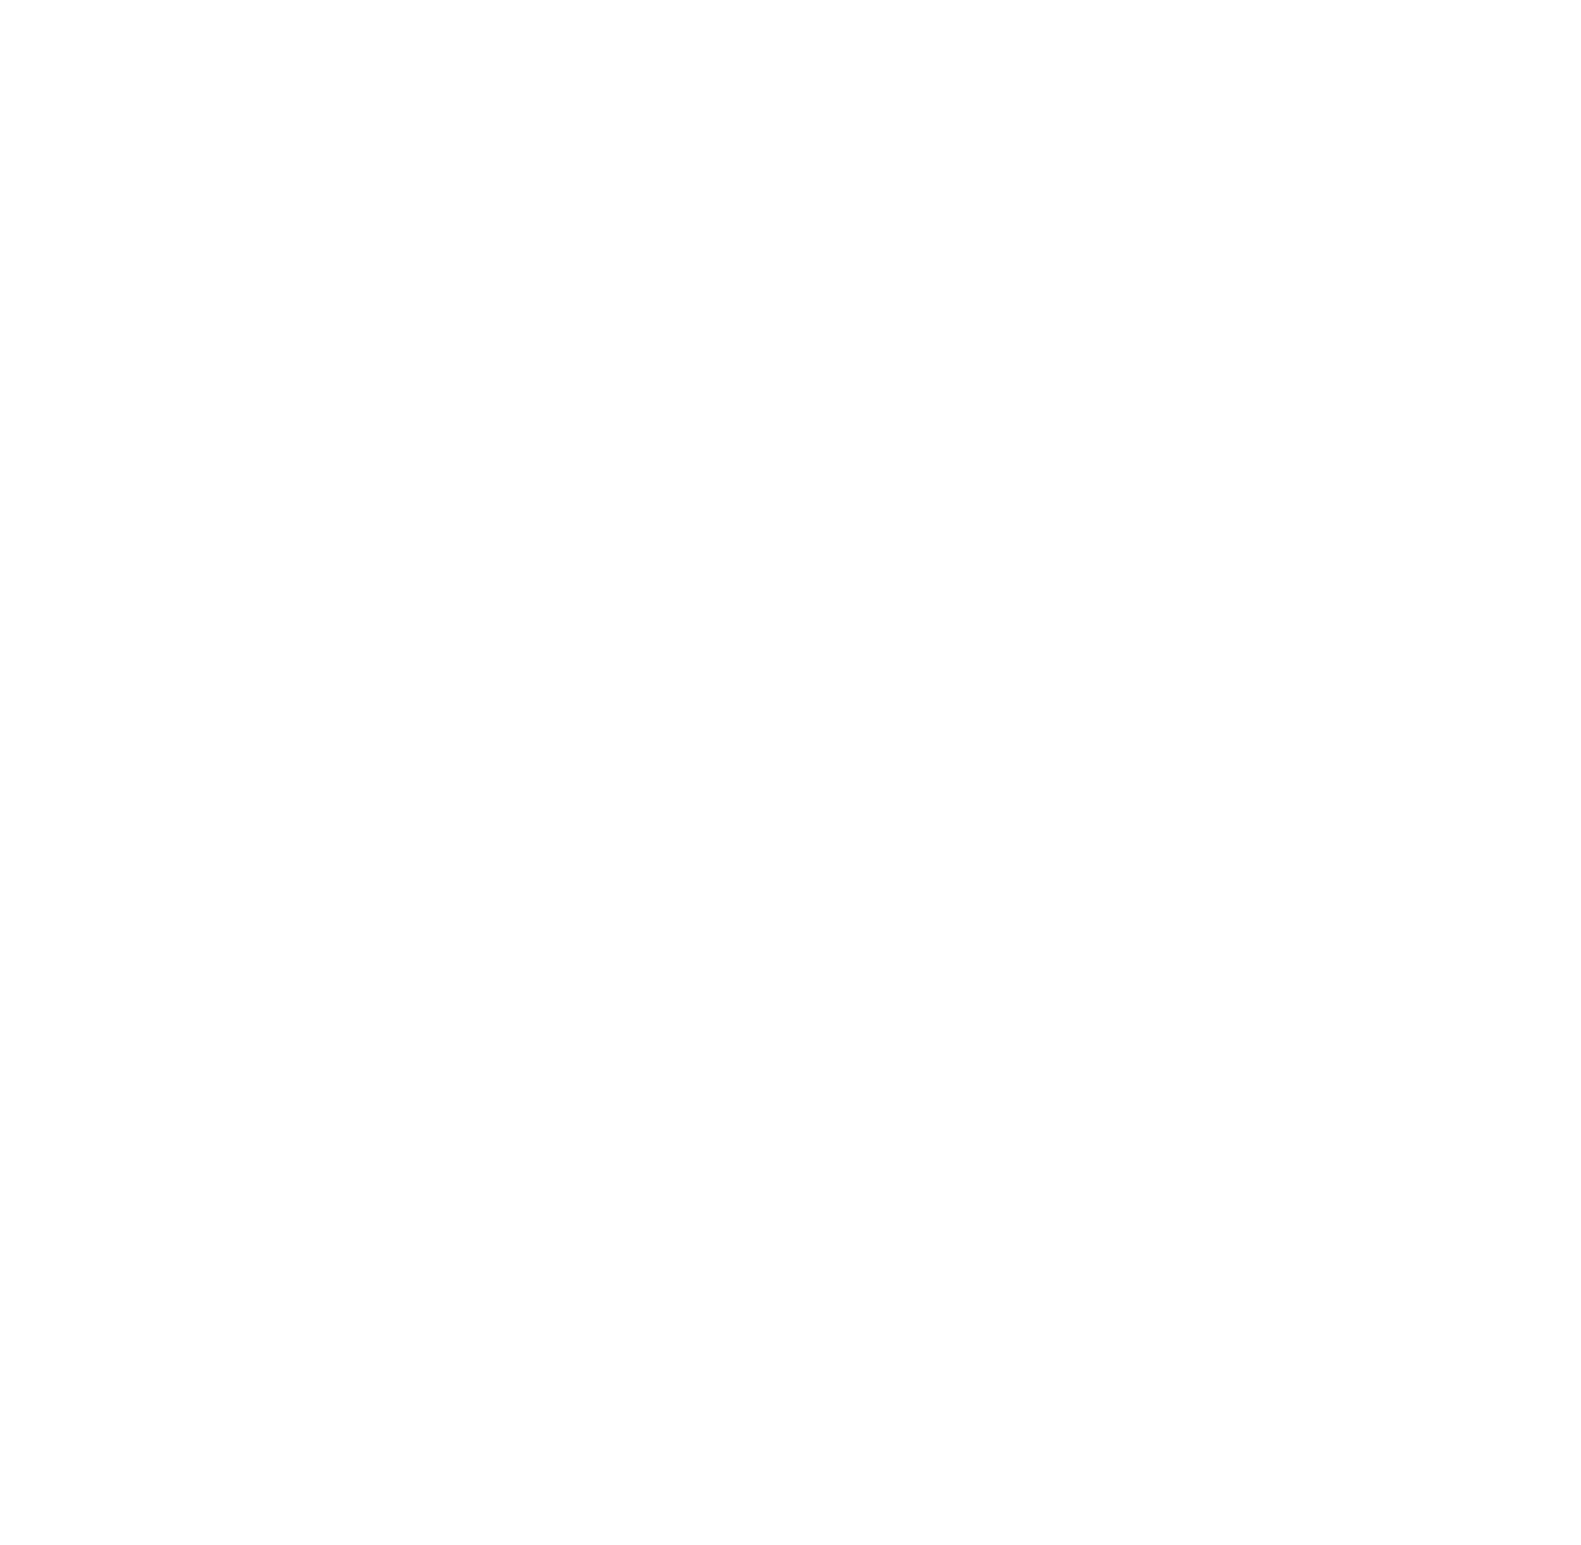 Ooredoo Qatar logo pour fonds sombres (PNG transparent)